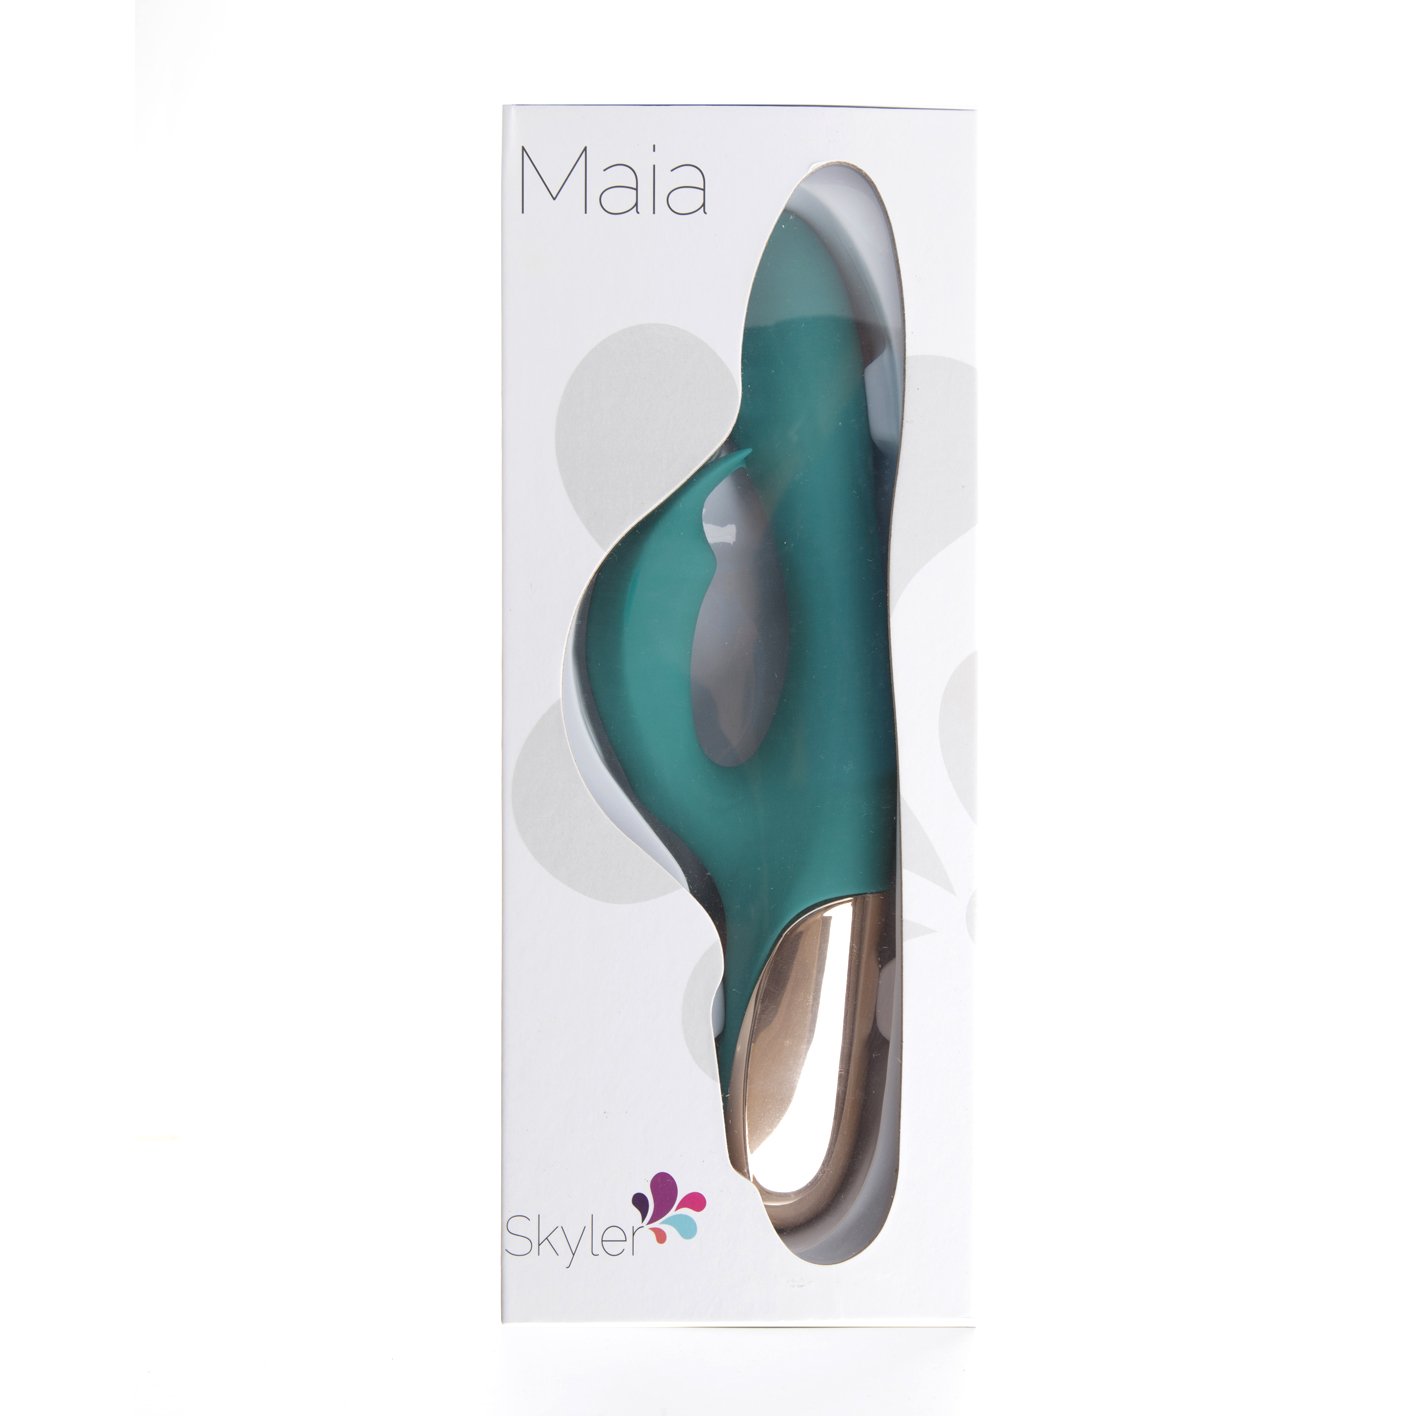 Maia Skyler -  21.6 cm Green USB Rechargeable Bendable Rabbit Vibrator